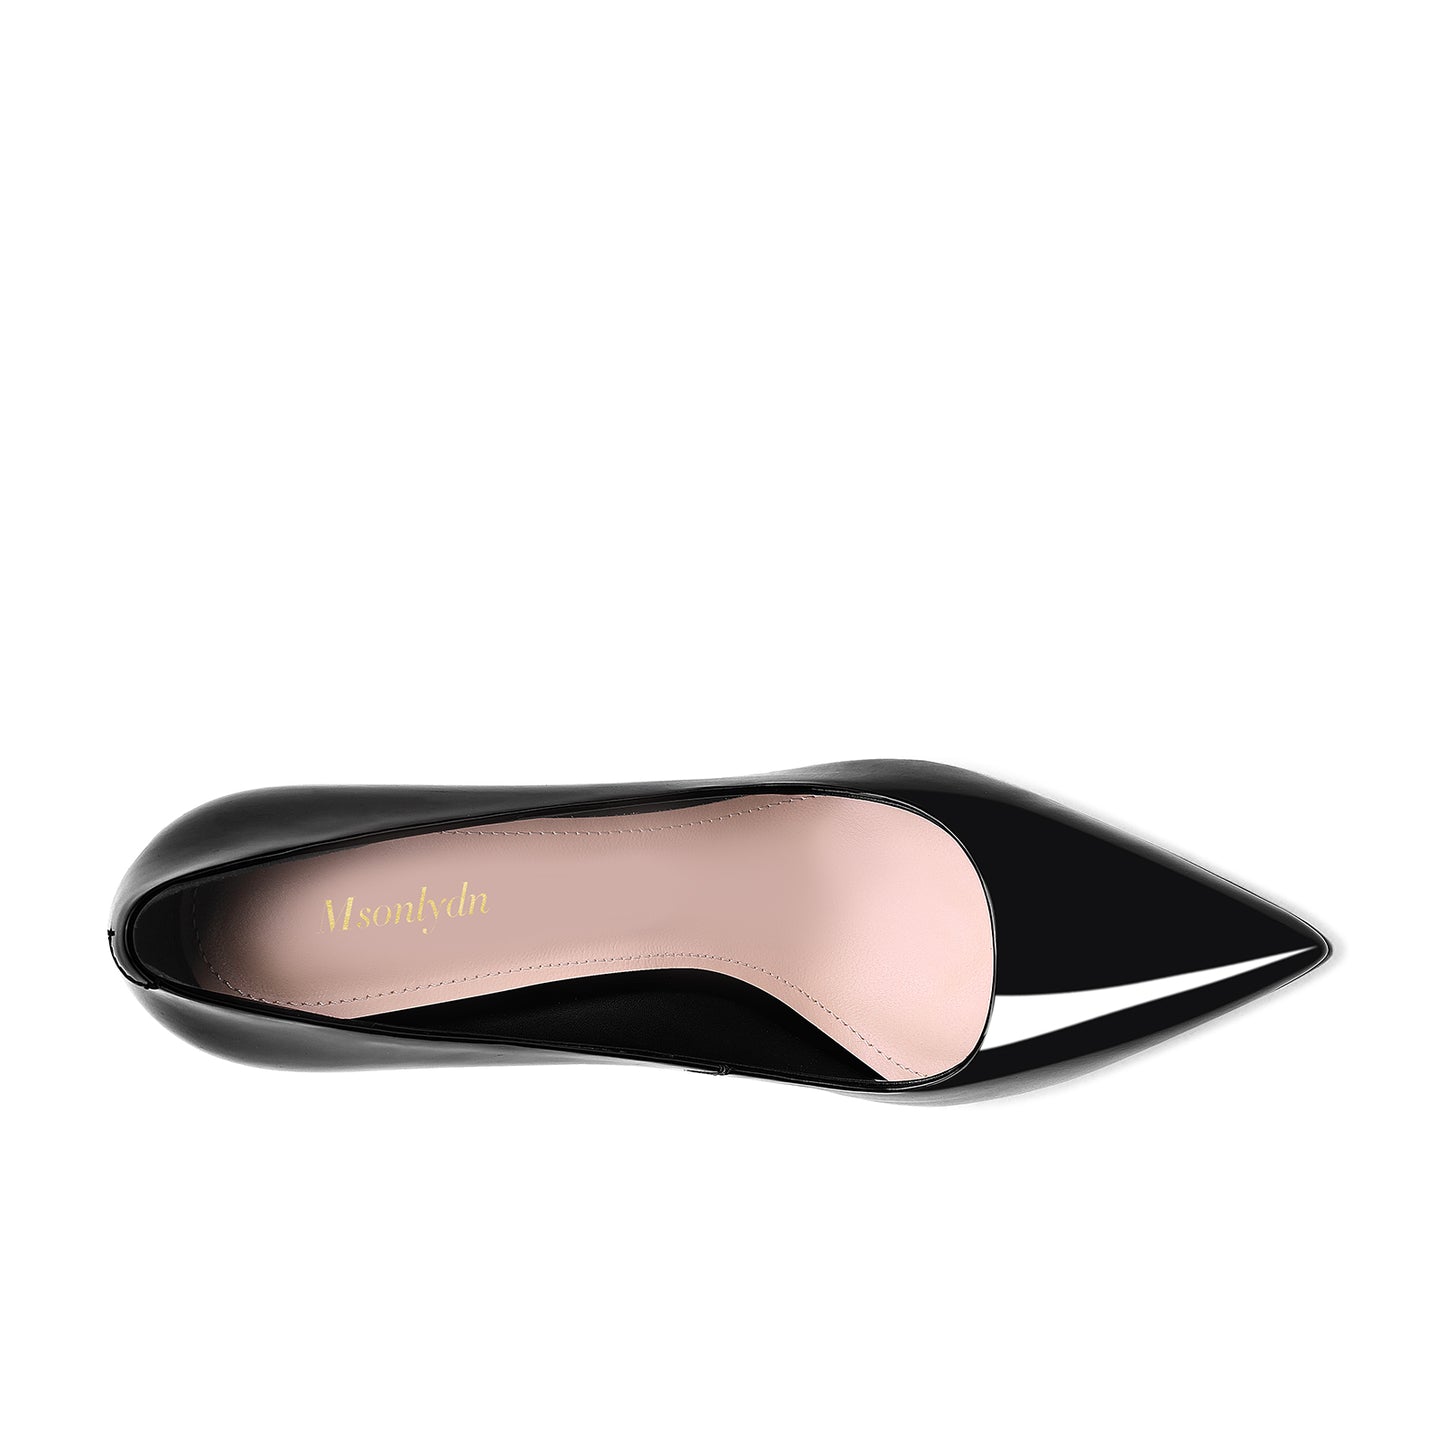 Platform Women's Leather High Heels: Dressy, Casual & Business